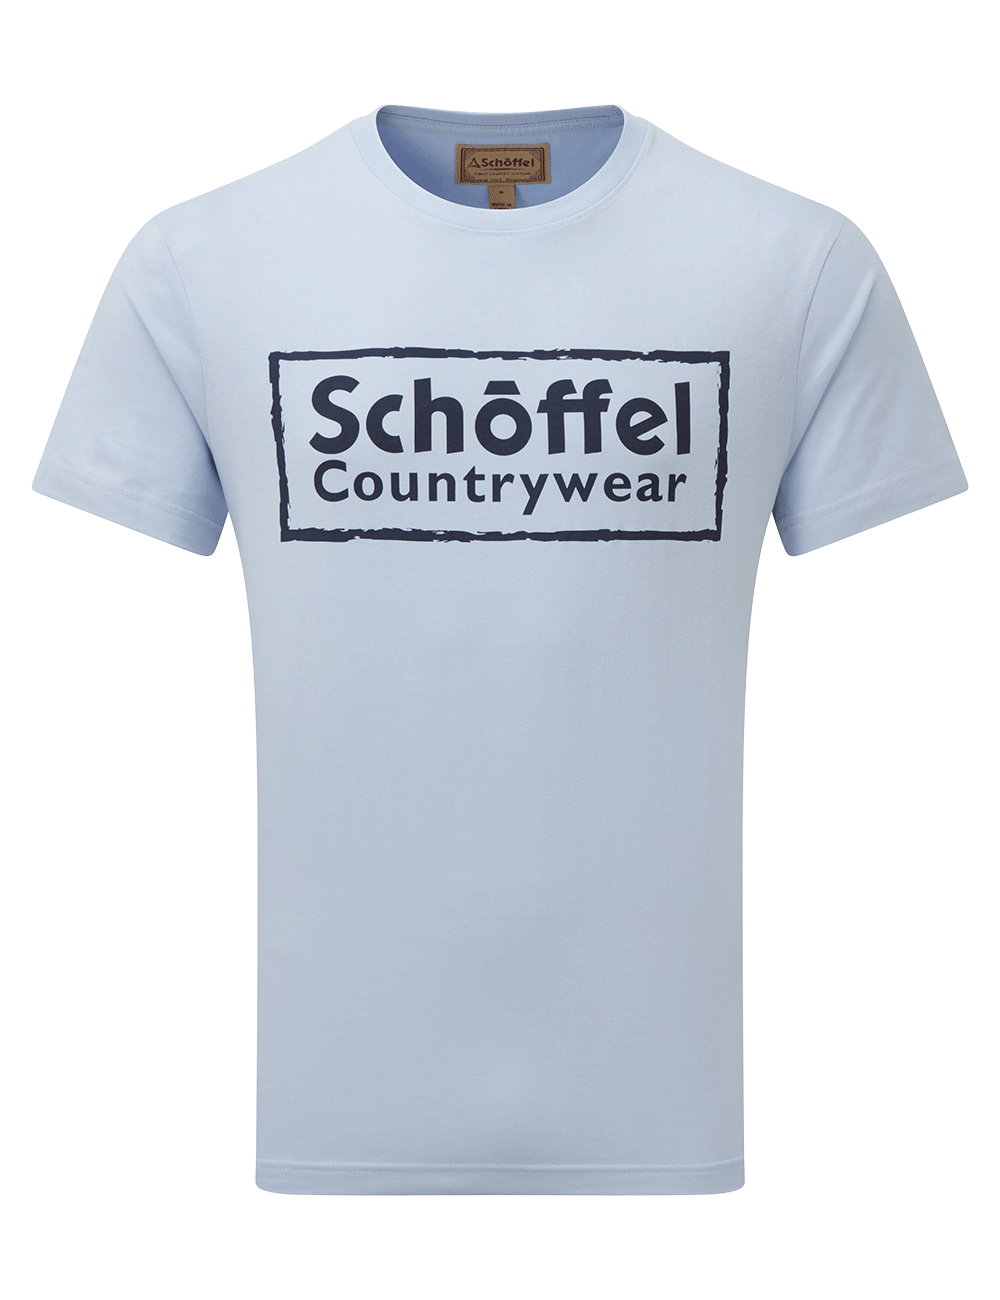 Schoffel Heritage T-Shirt - Pale Blue